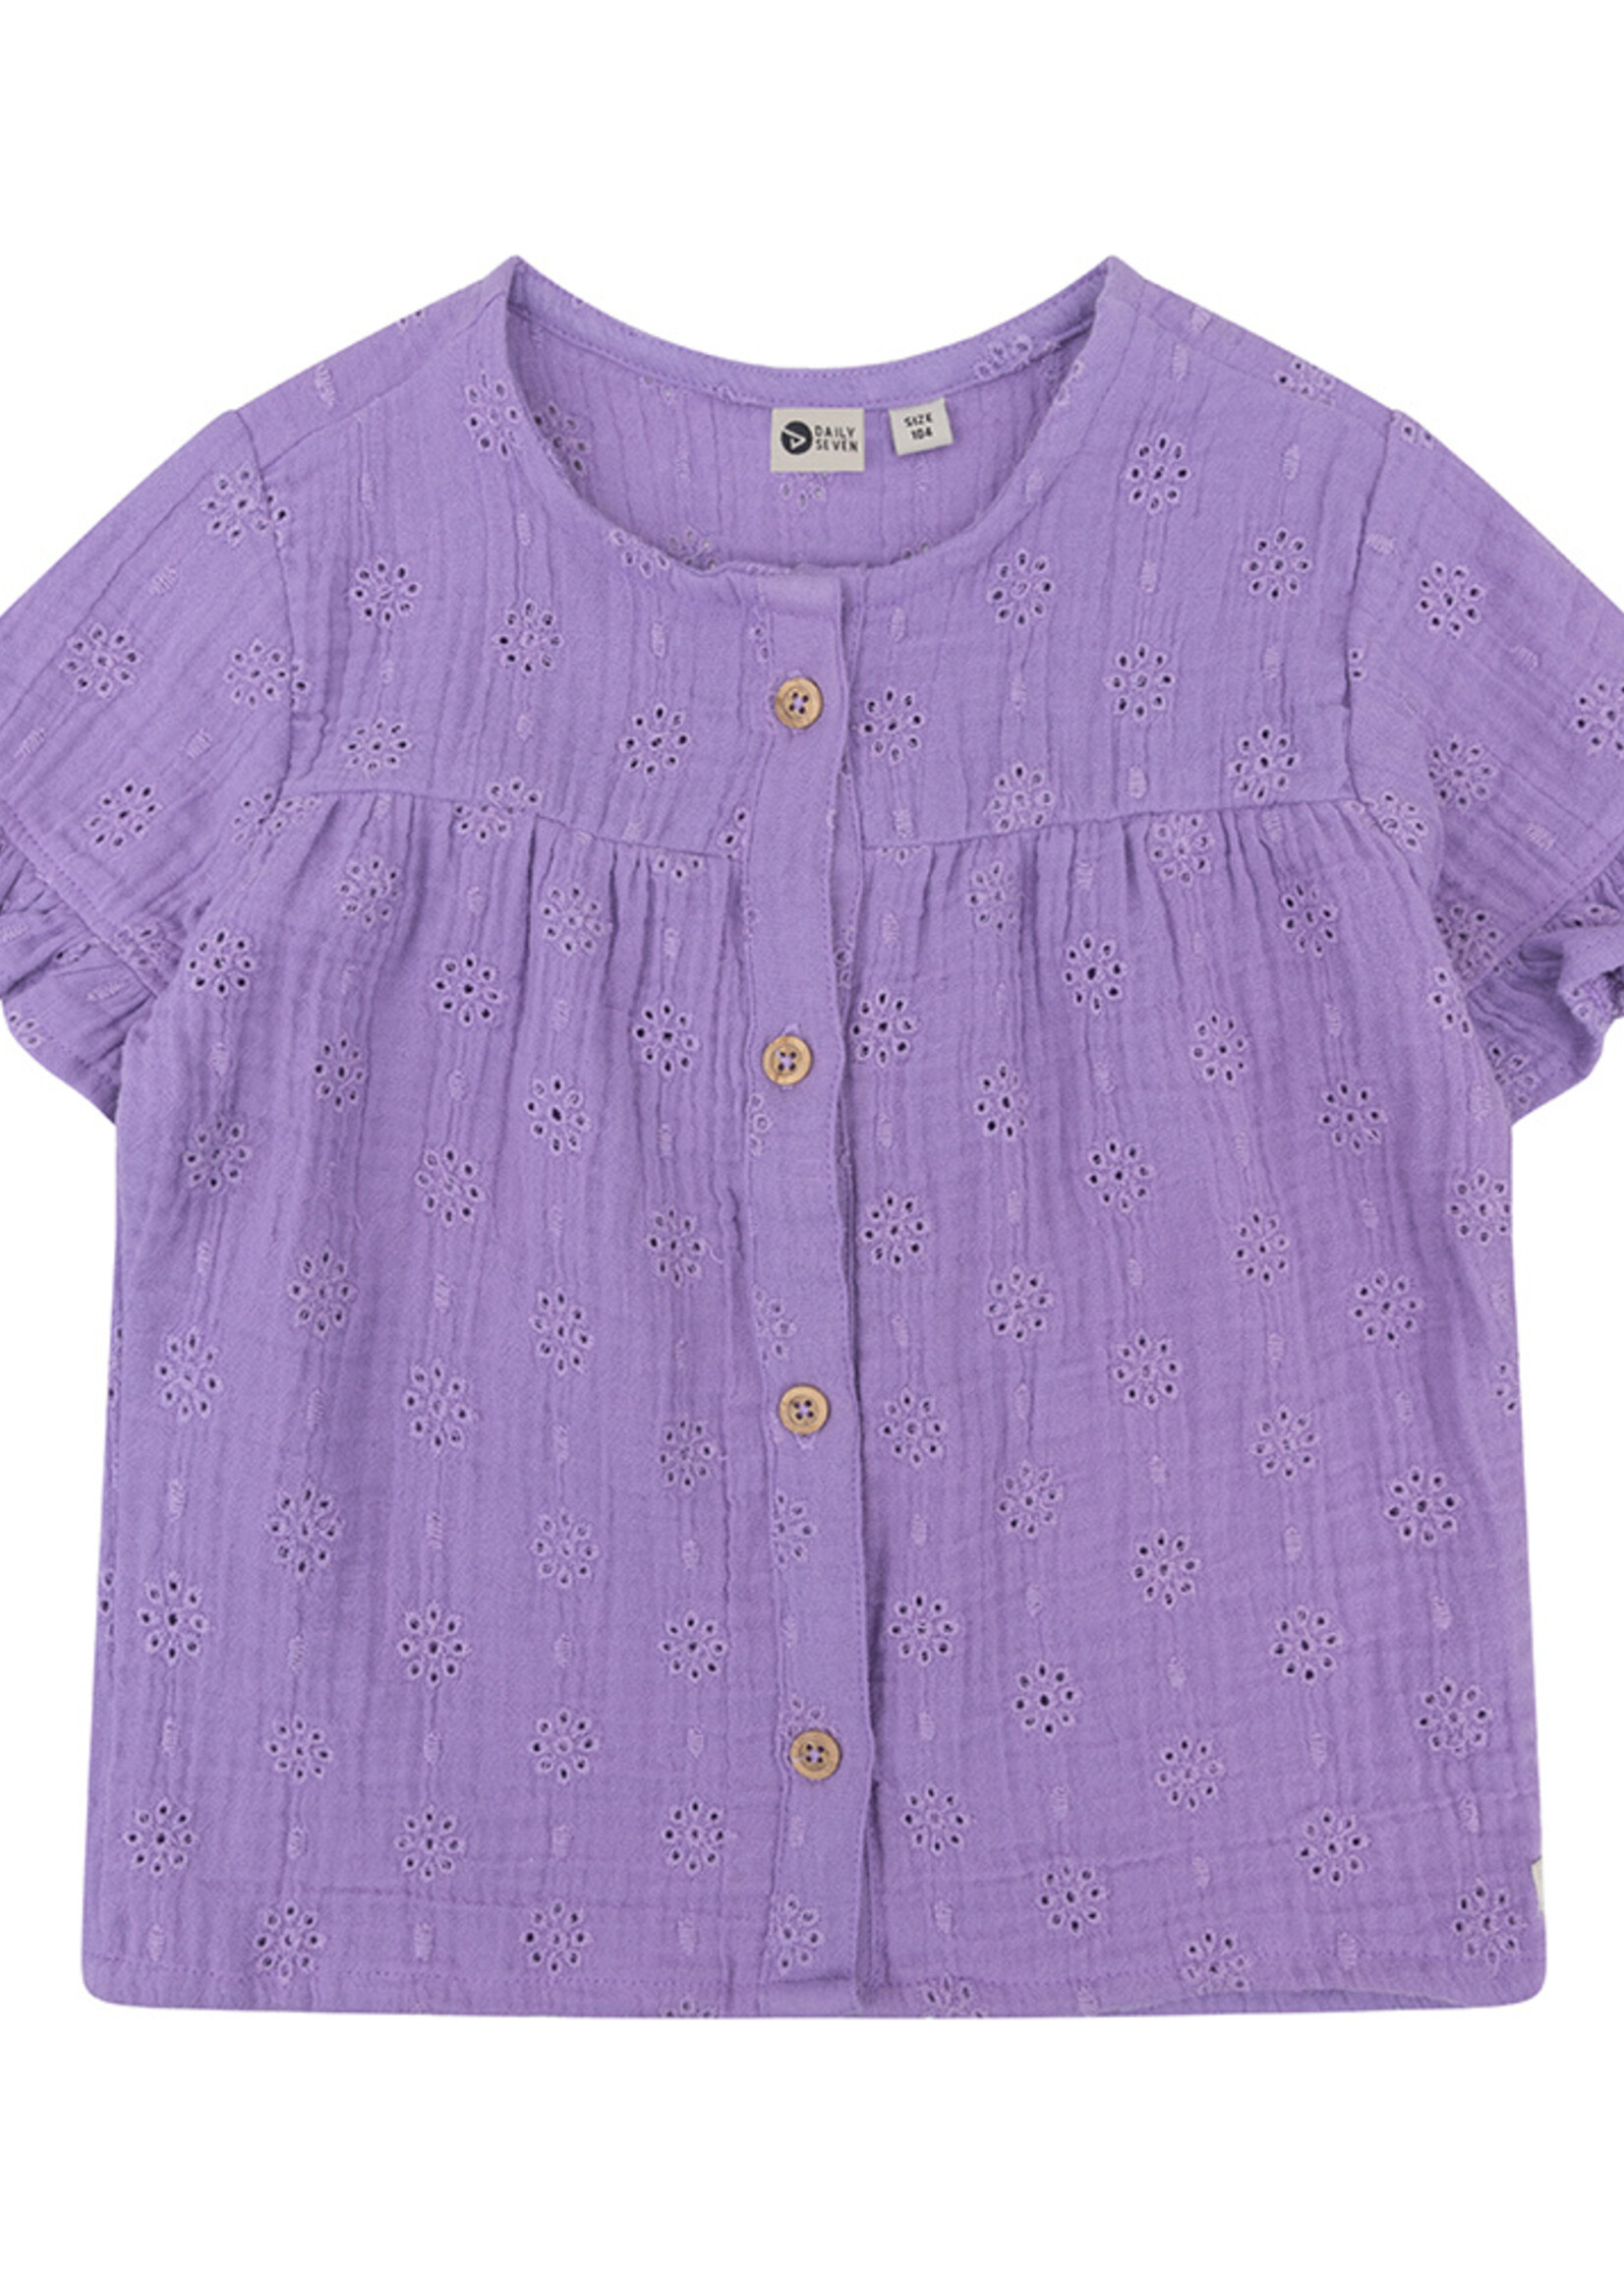 Daily7 Shirt Shortsleeve Muslin Broderie, Dahlia Purple